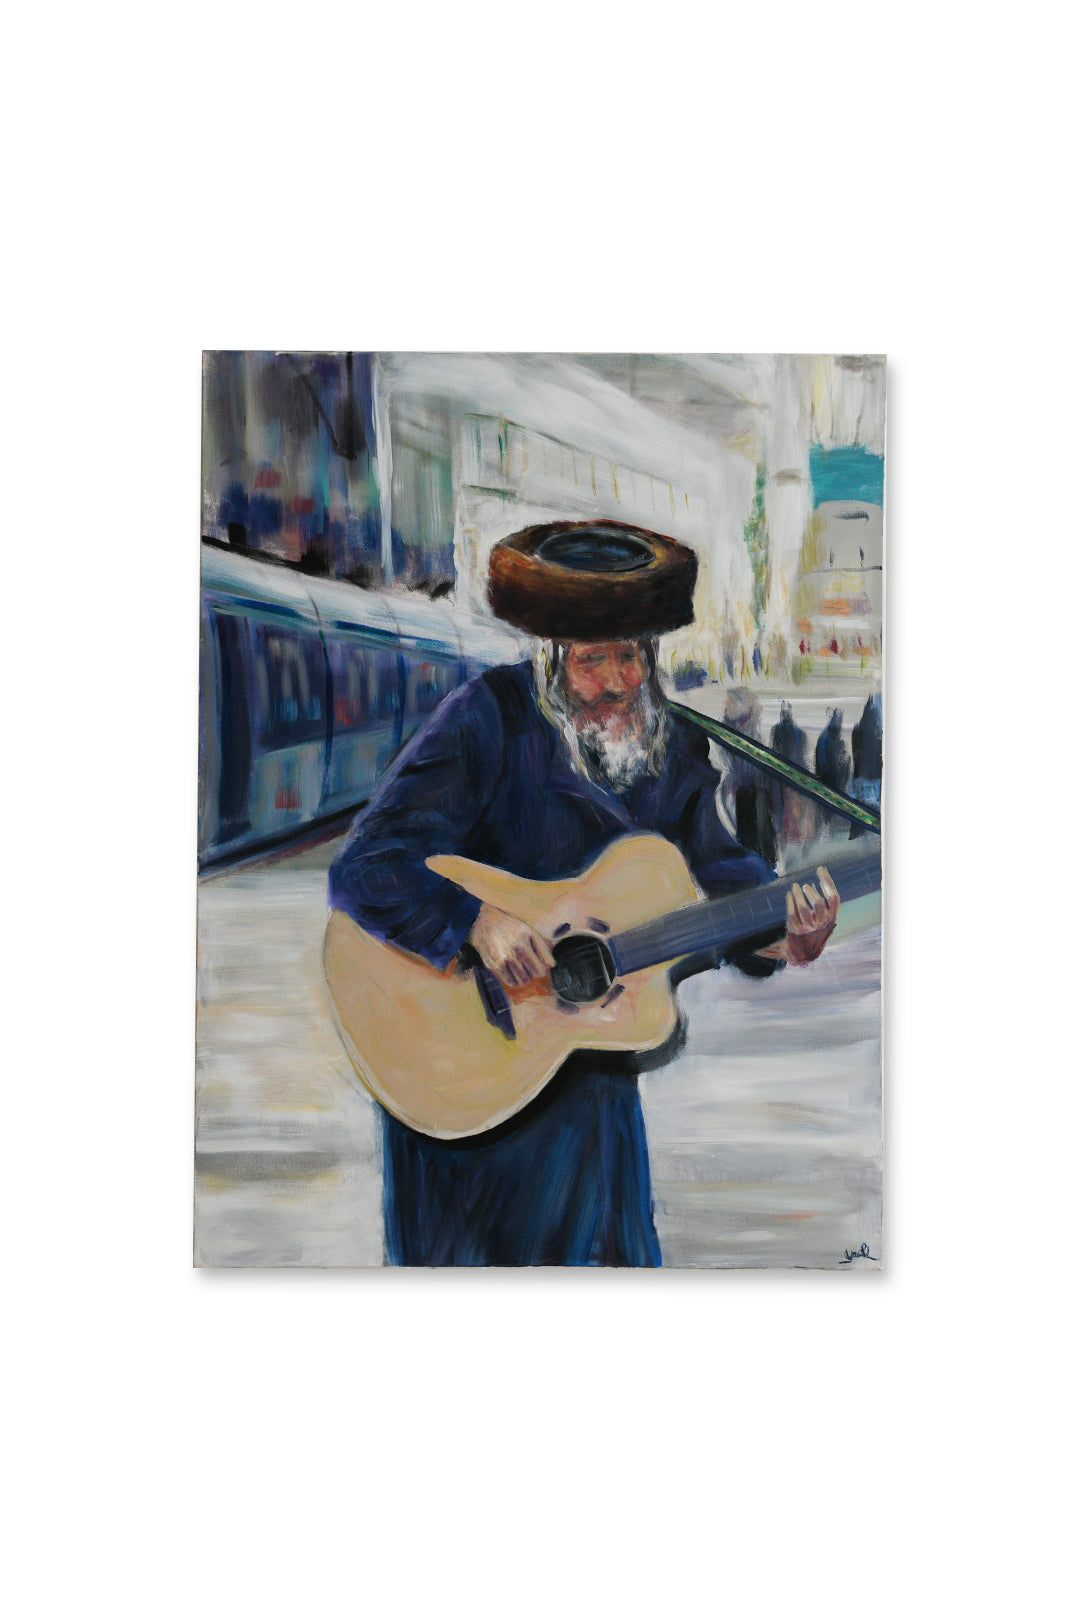 Musician in the street of Jerusalem